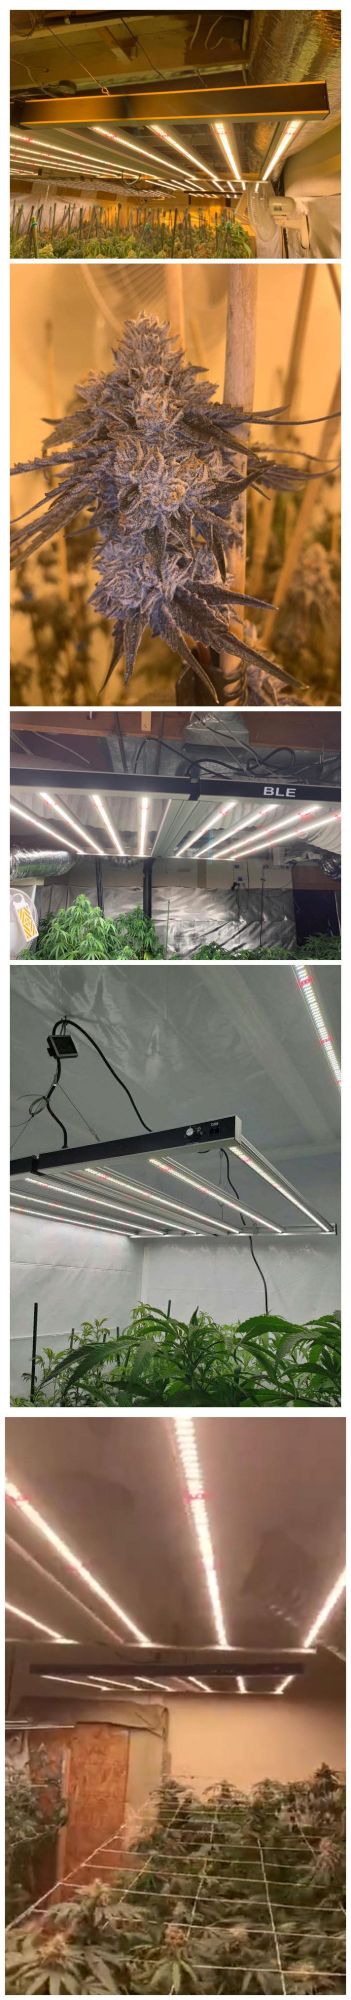 Samsung Lm301b Lm301h LED Grow Light White Full Spectrum Grow Lights for Indoor Plants